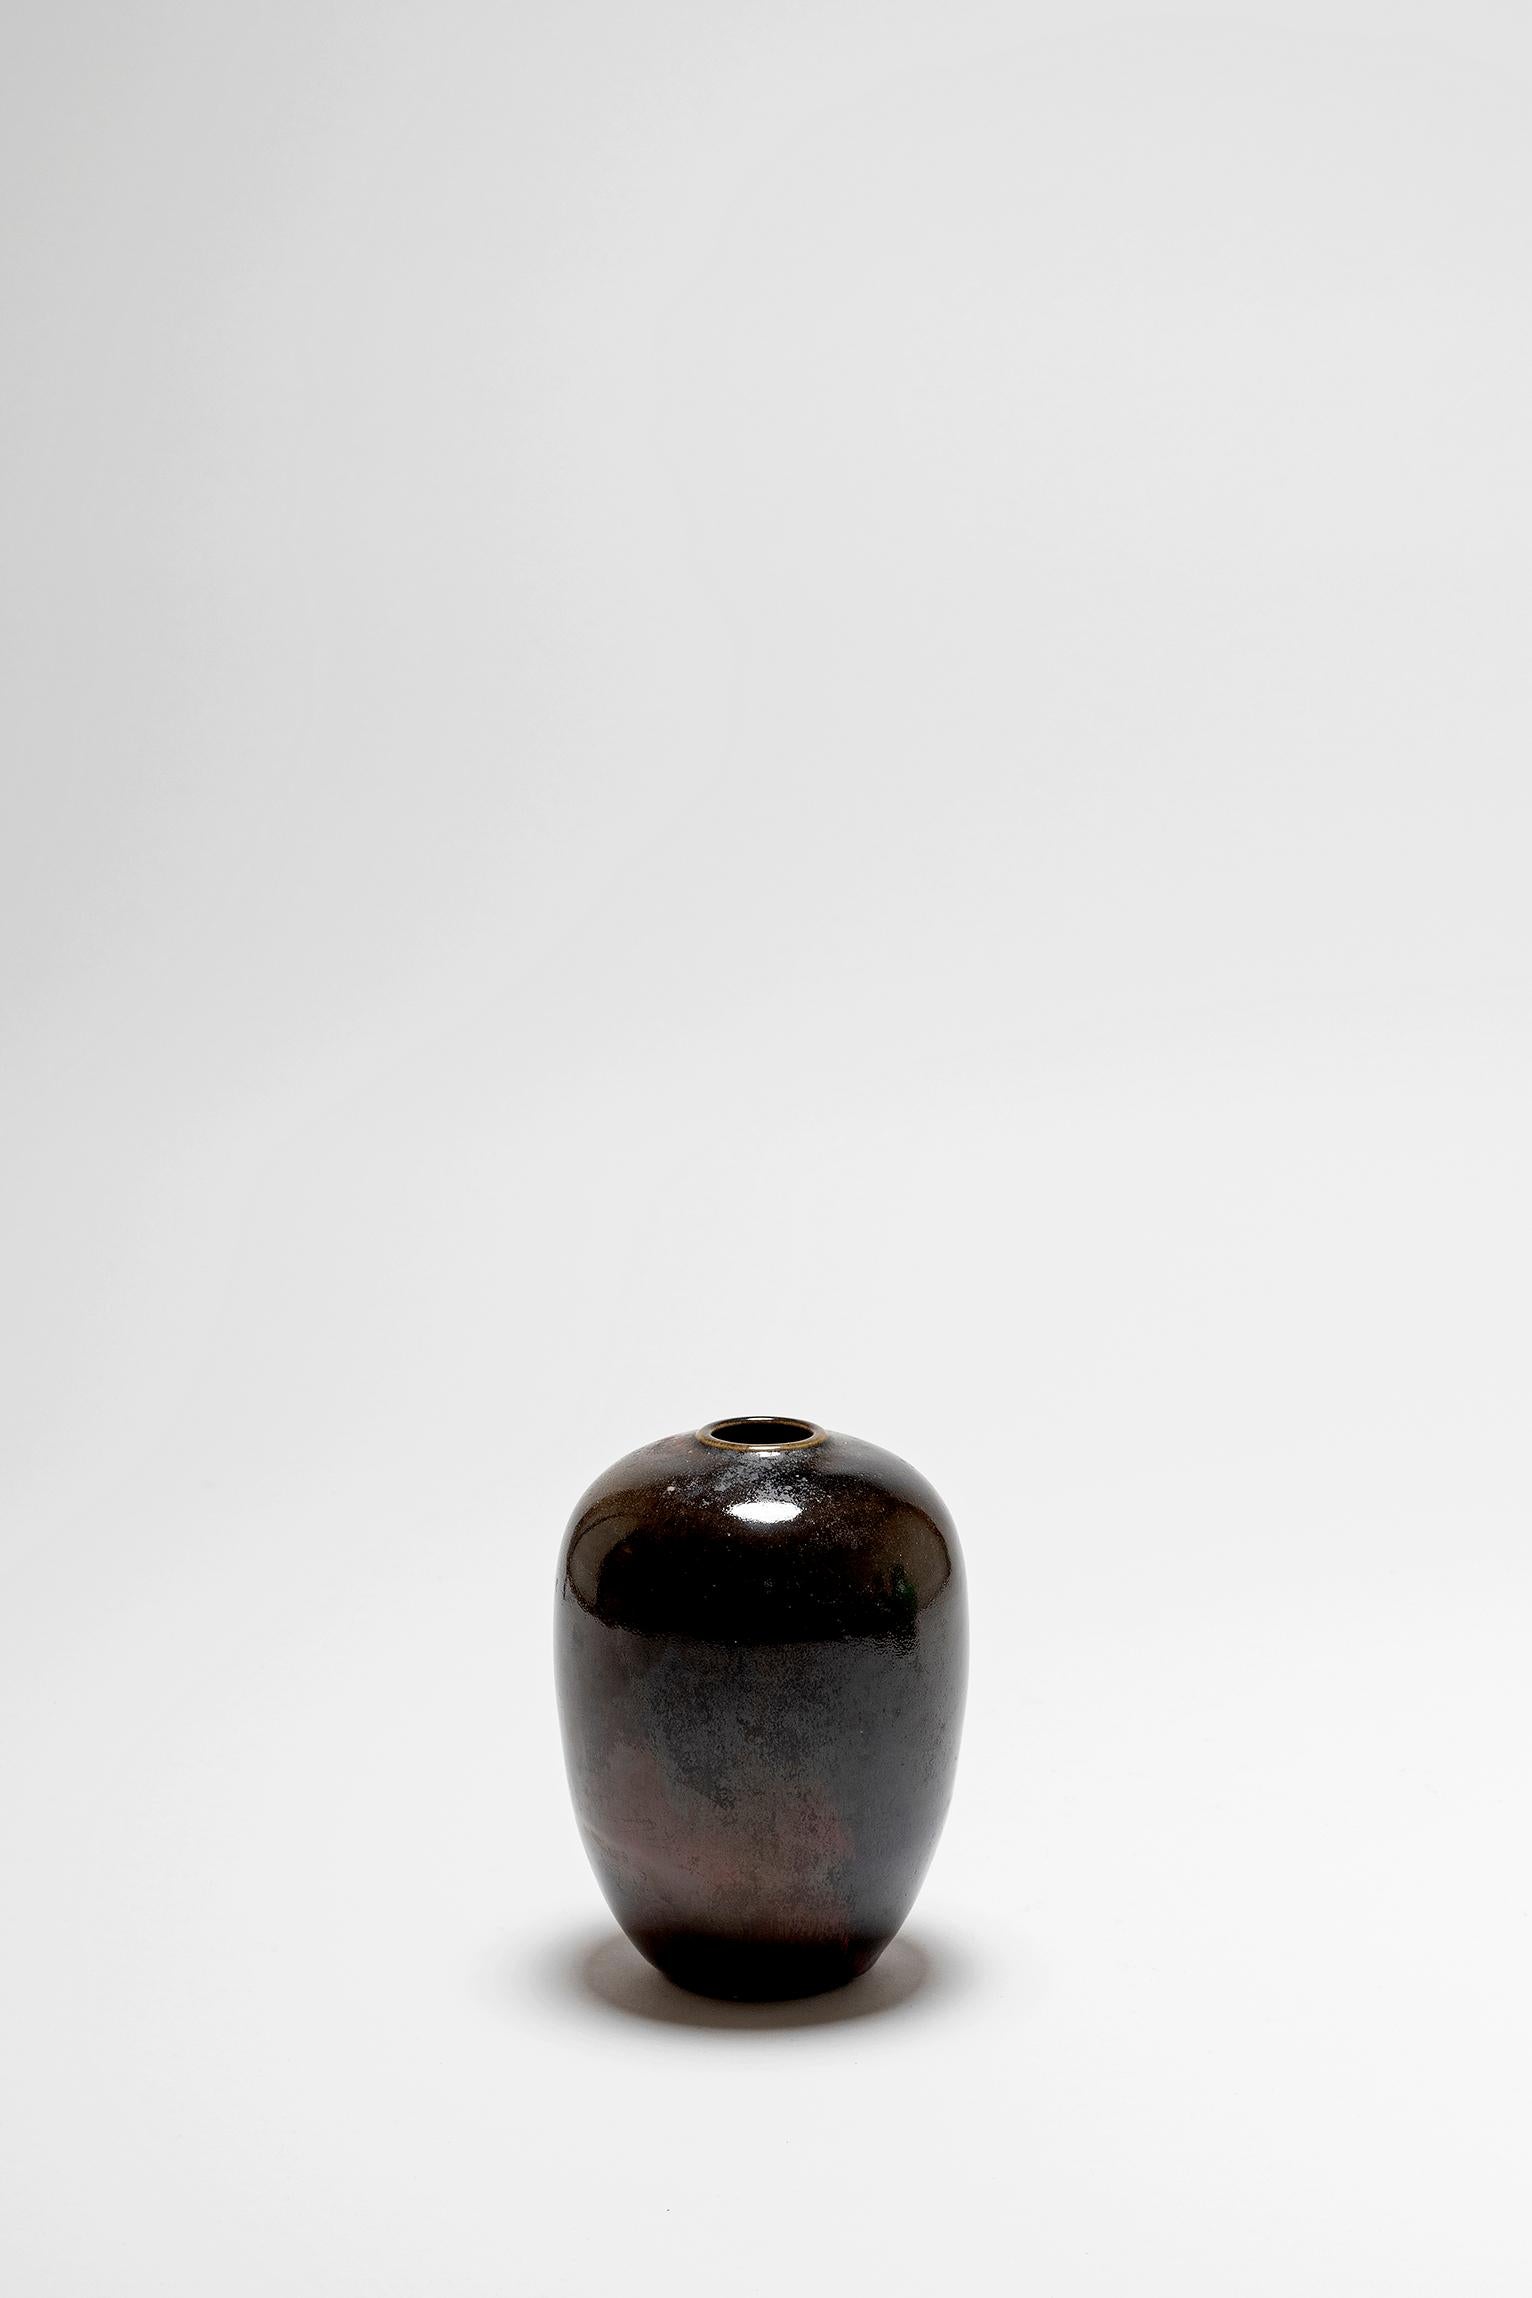 A dark olive green and brown ceramic vase, signed Djian
France, 1970s.